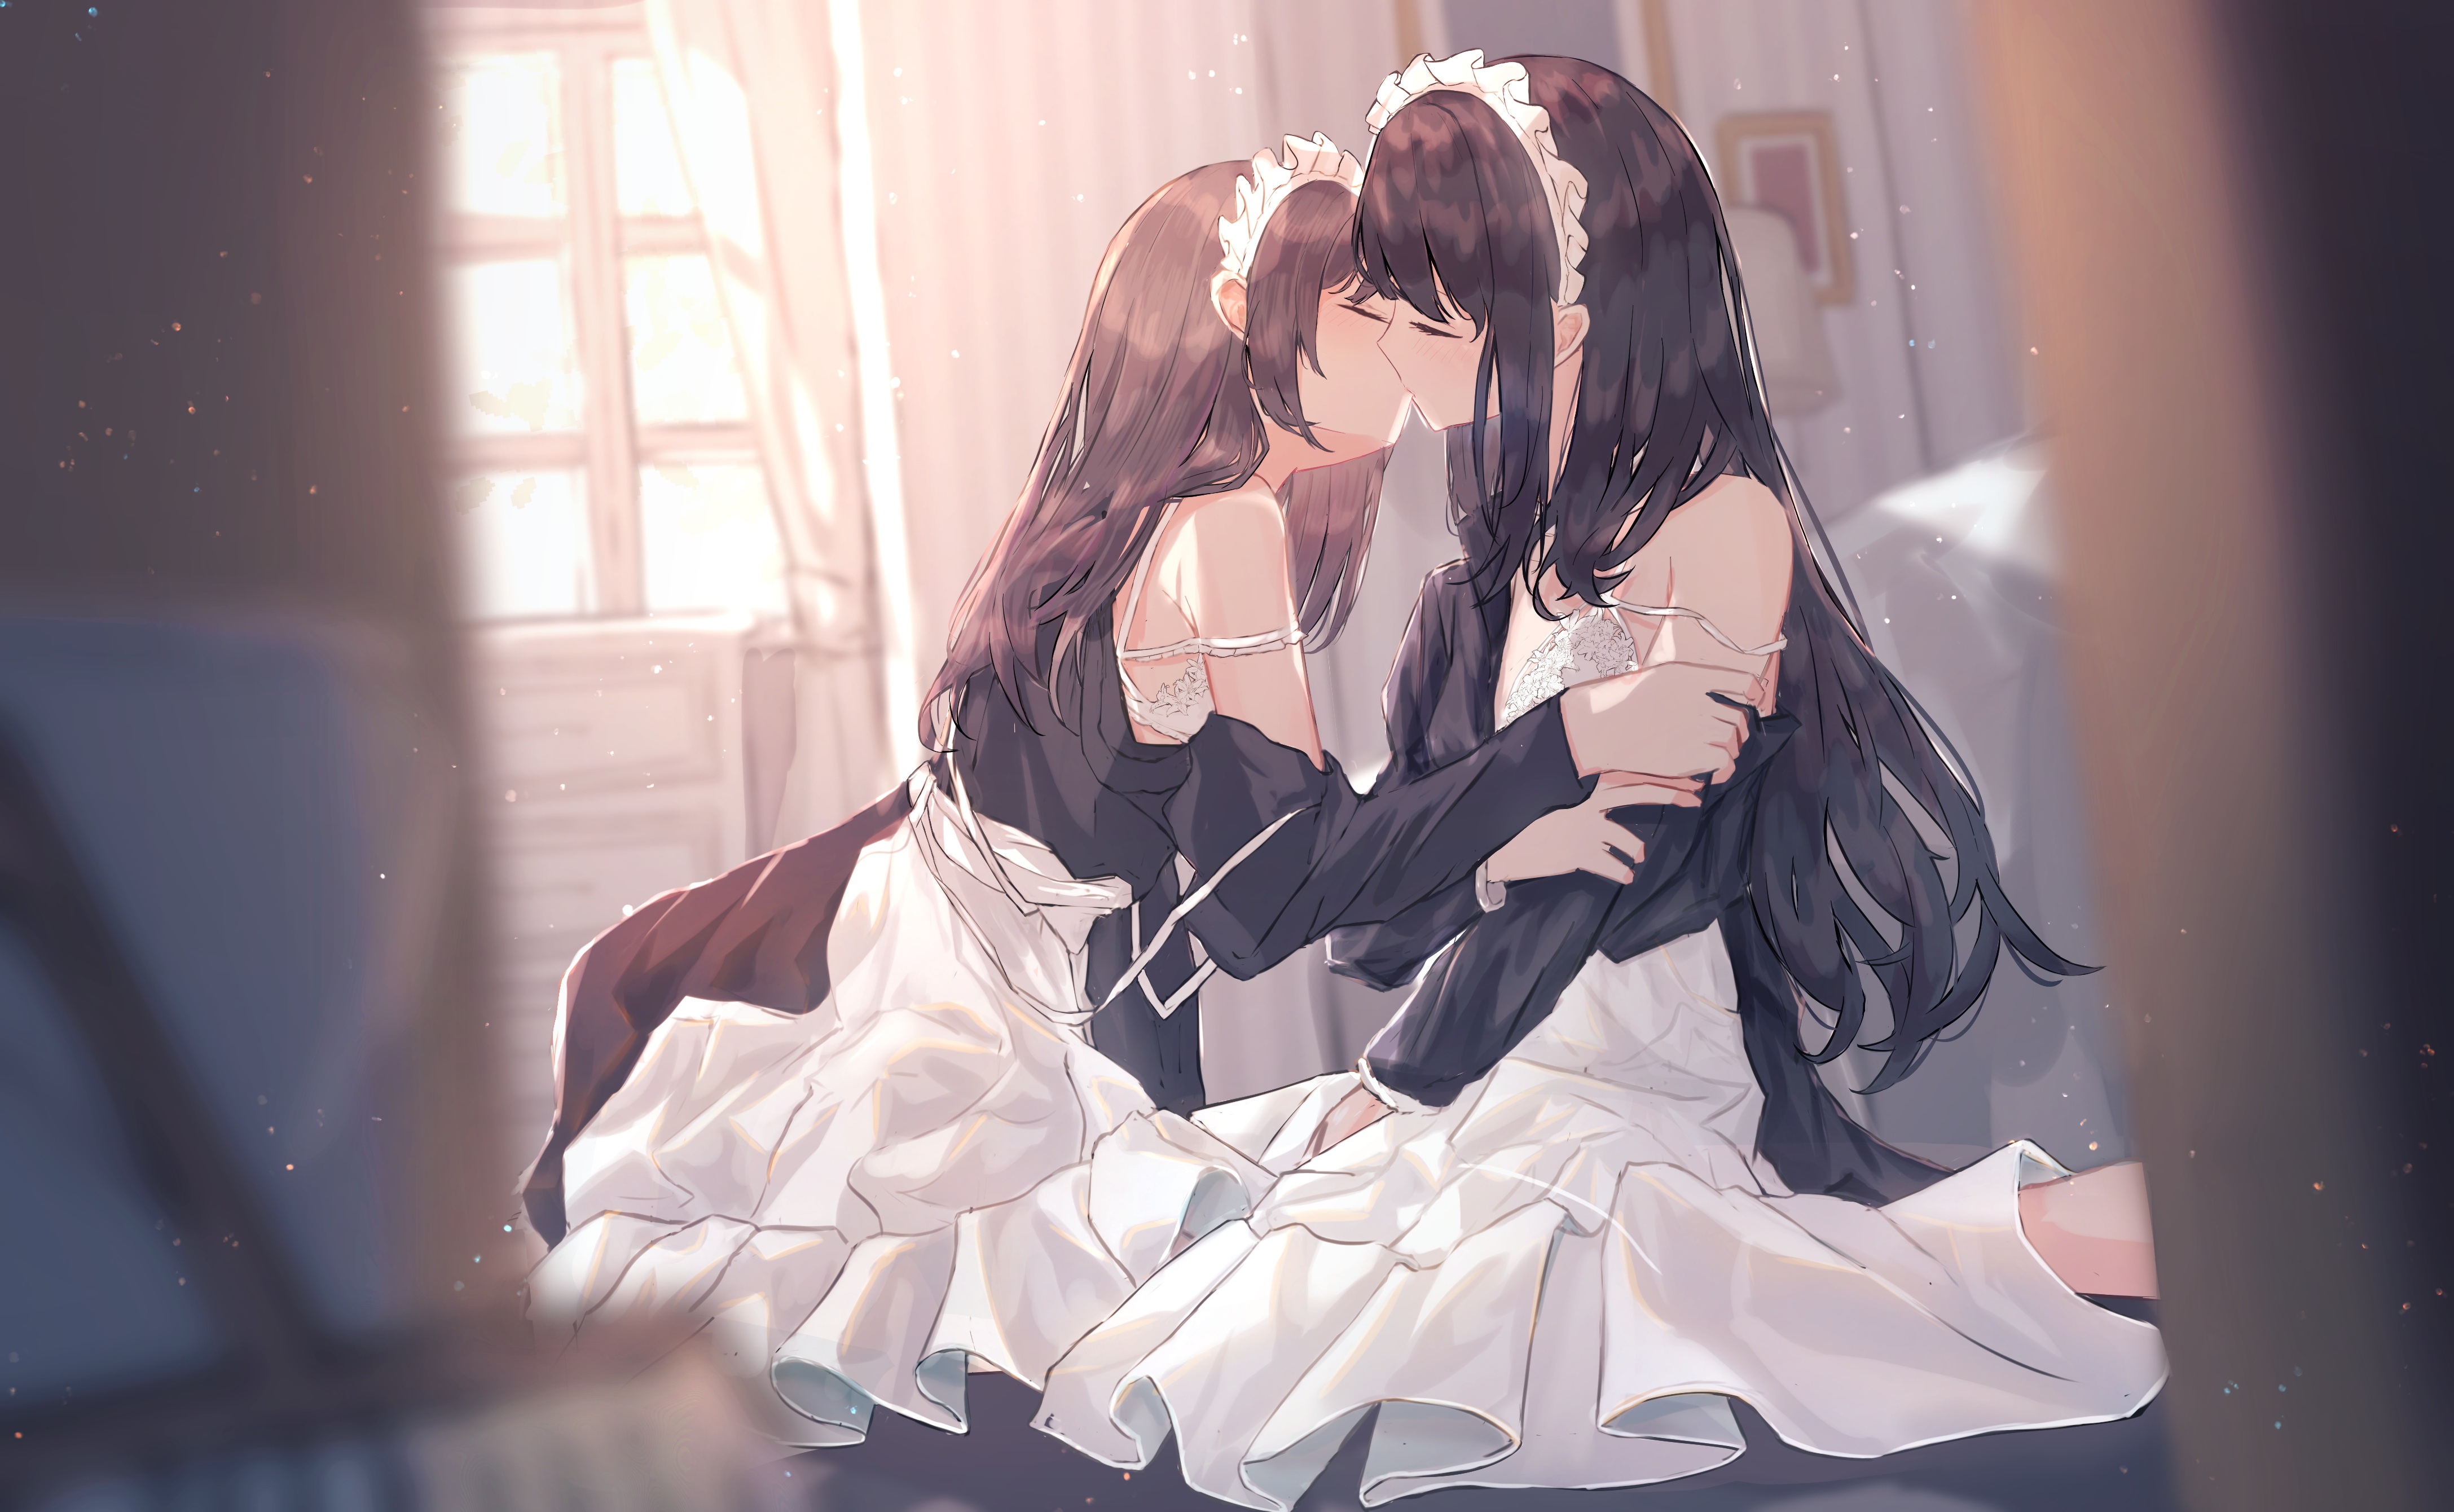 Lesbians Closed Eyes Two Women Anime Anime Girls Kissing Yuri